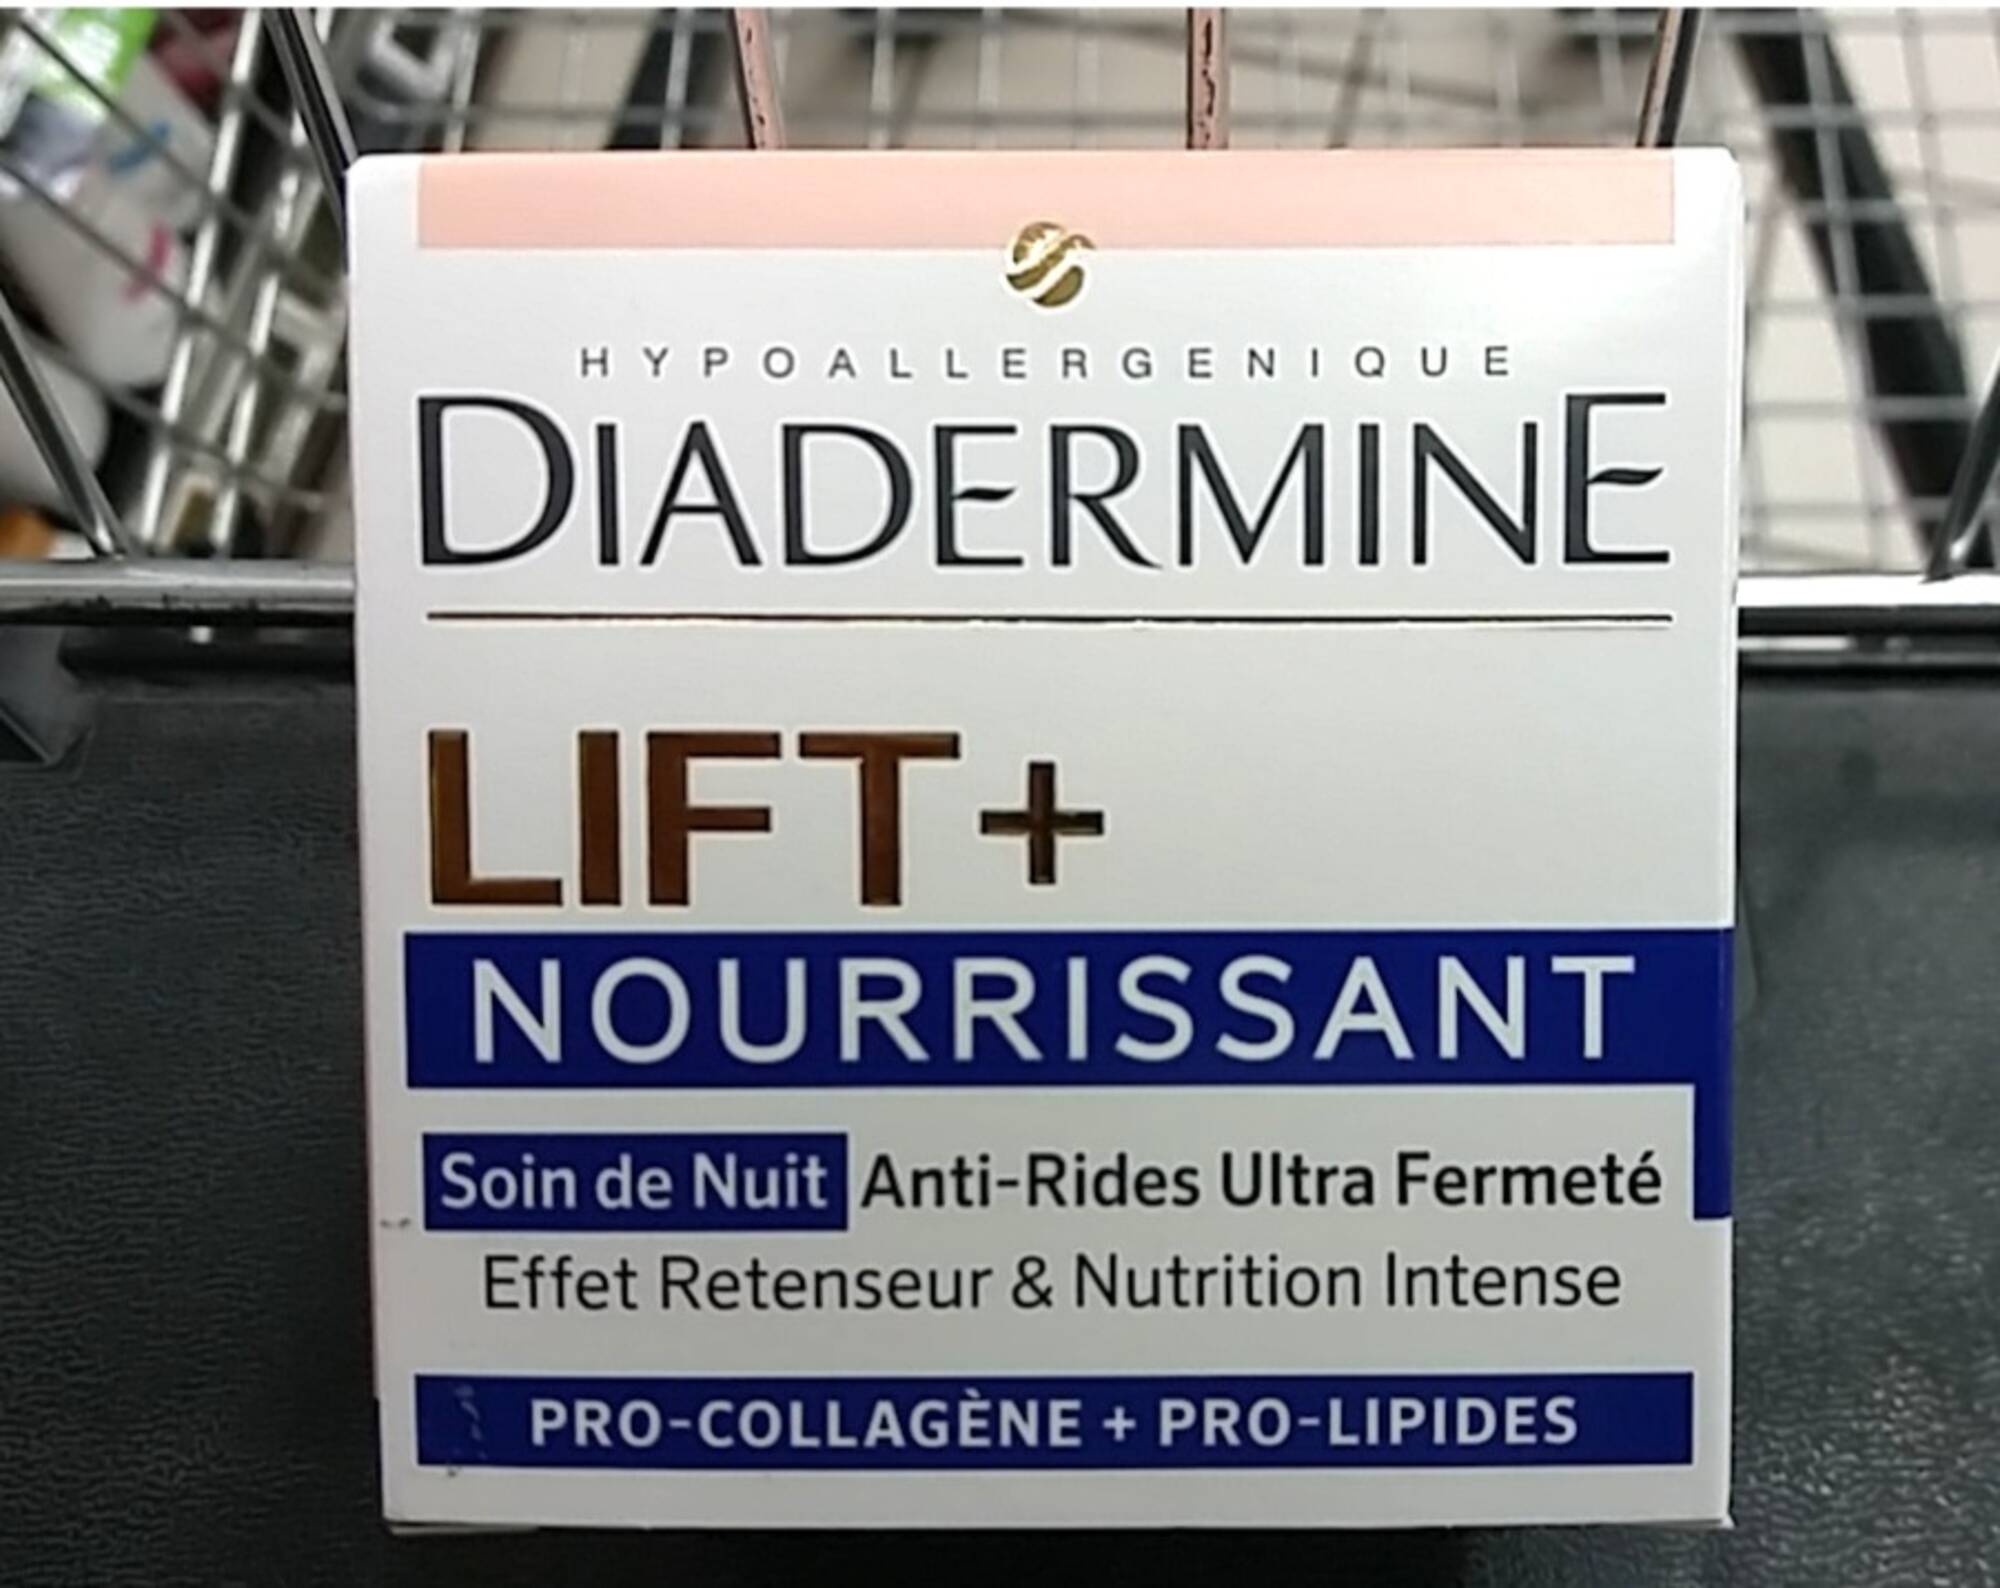 Nourrissant Anti-Rides Nuit Lift+ ≡ Diadermine